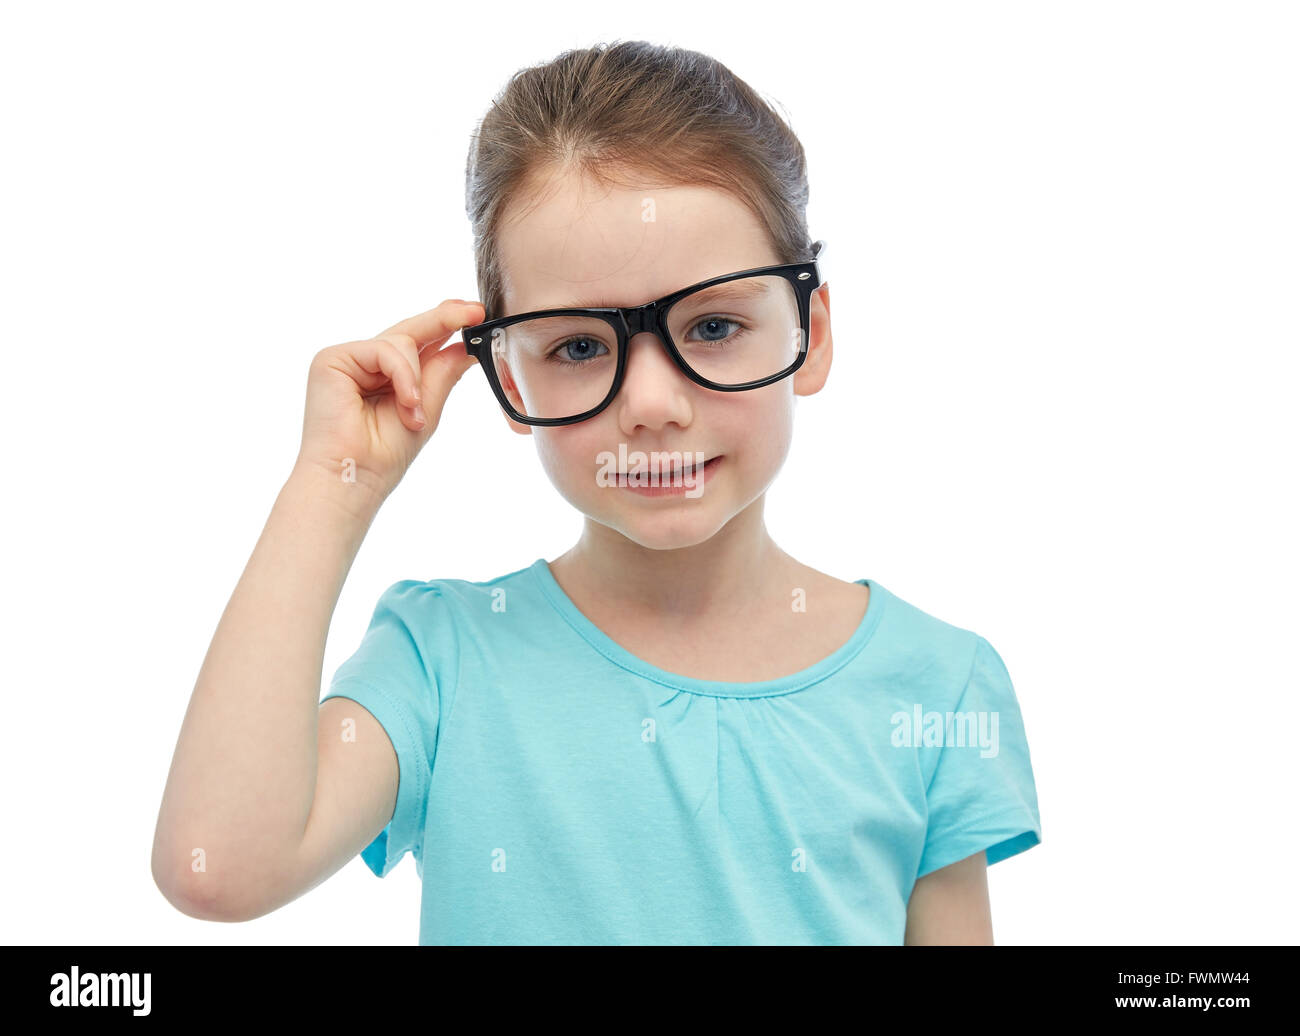 happy little girl in eyeglasses Stock Photo